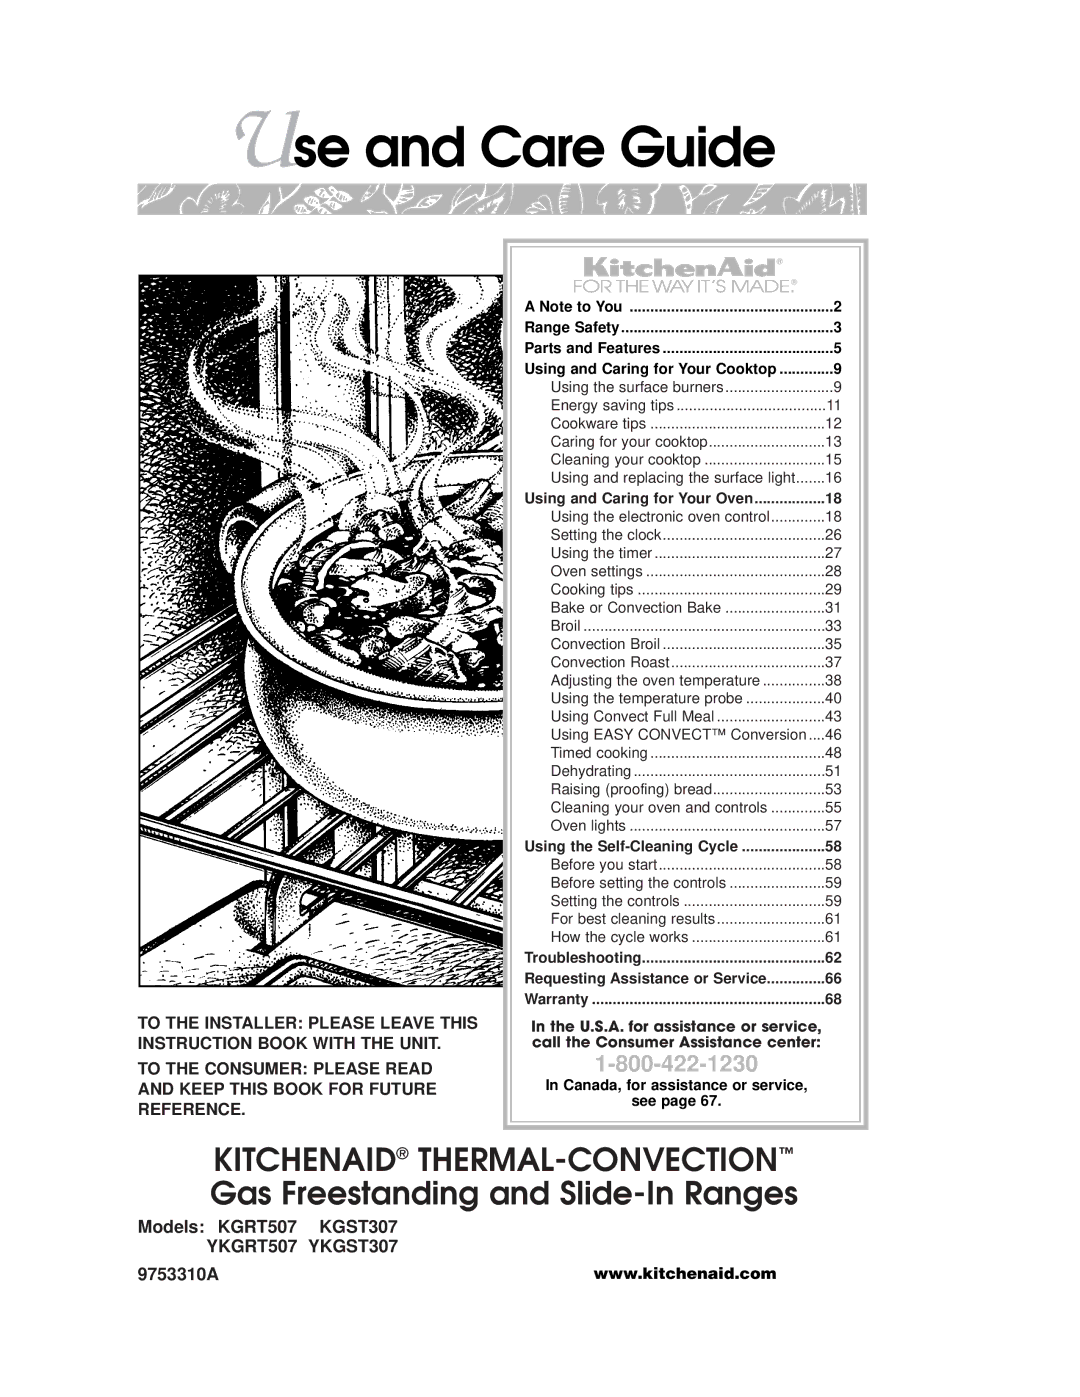 KitchenAid warranty Use and Care Guide, Models KGRT507 KGST307, YKGRT507 YKGST307, 9753310A 